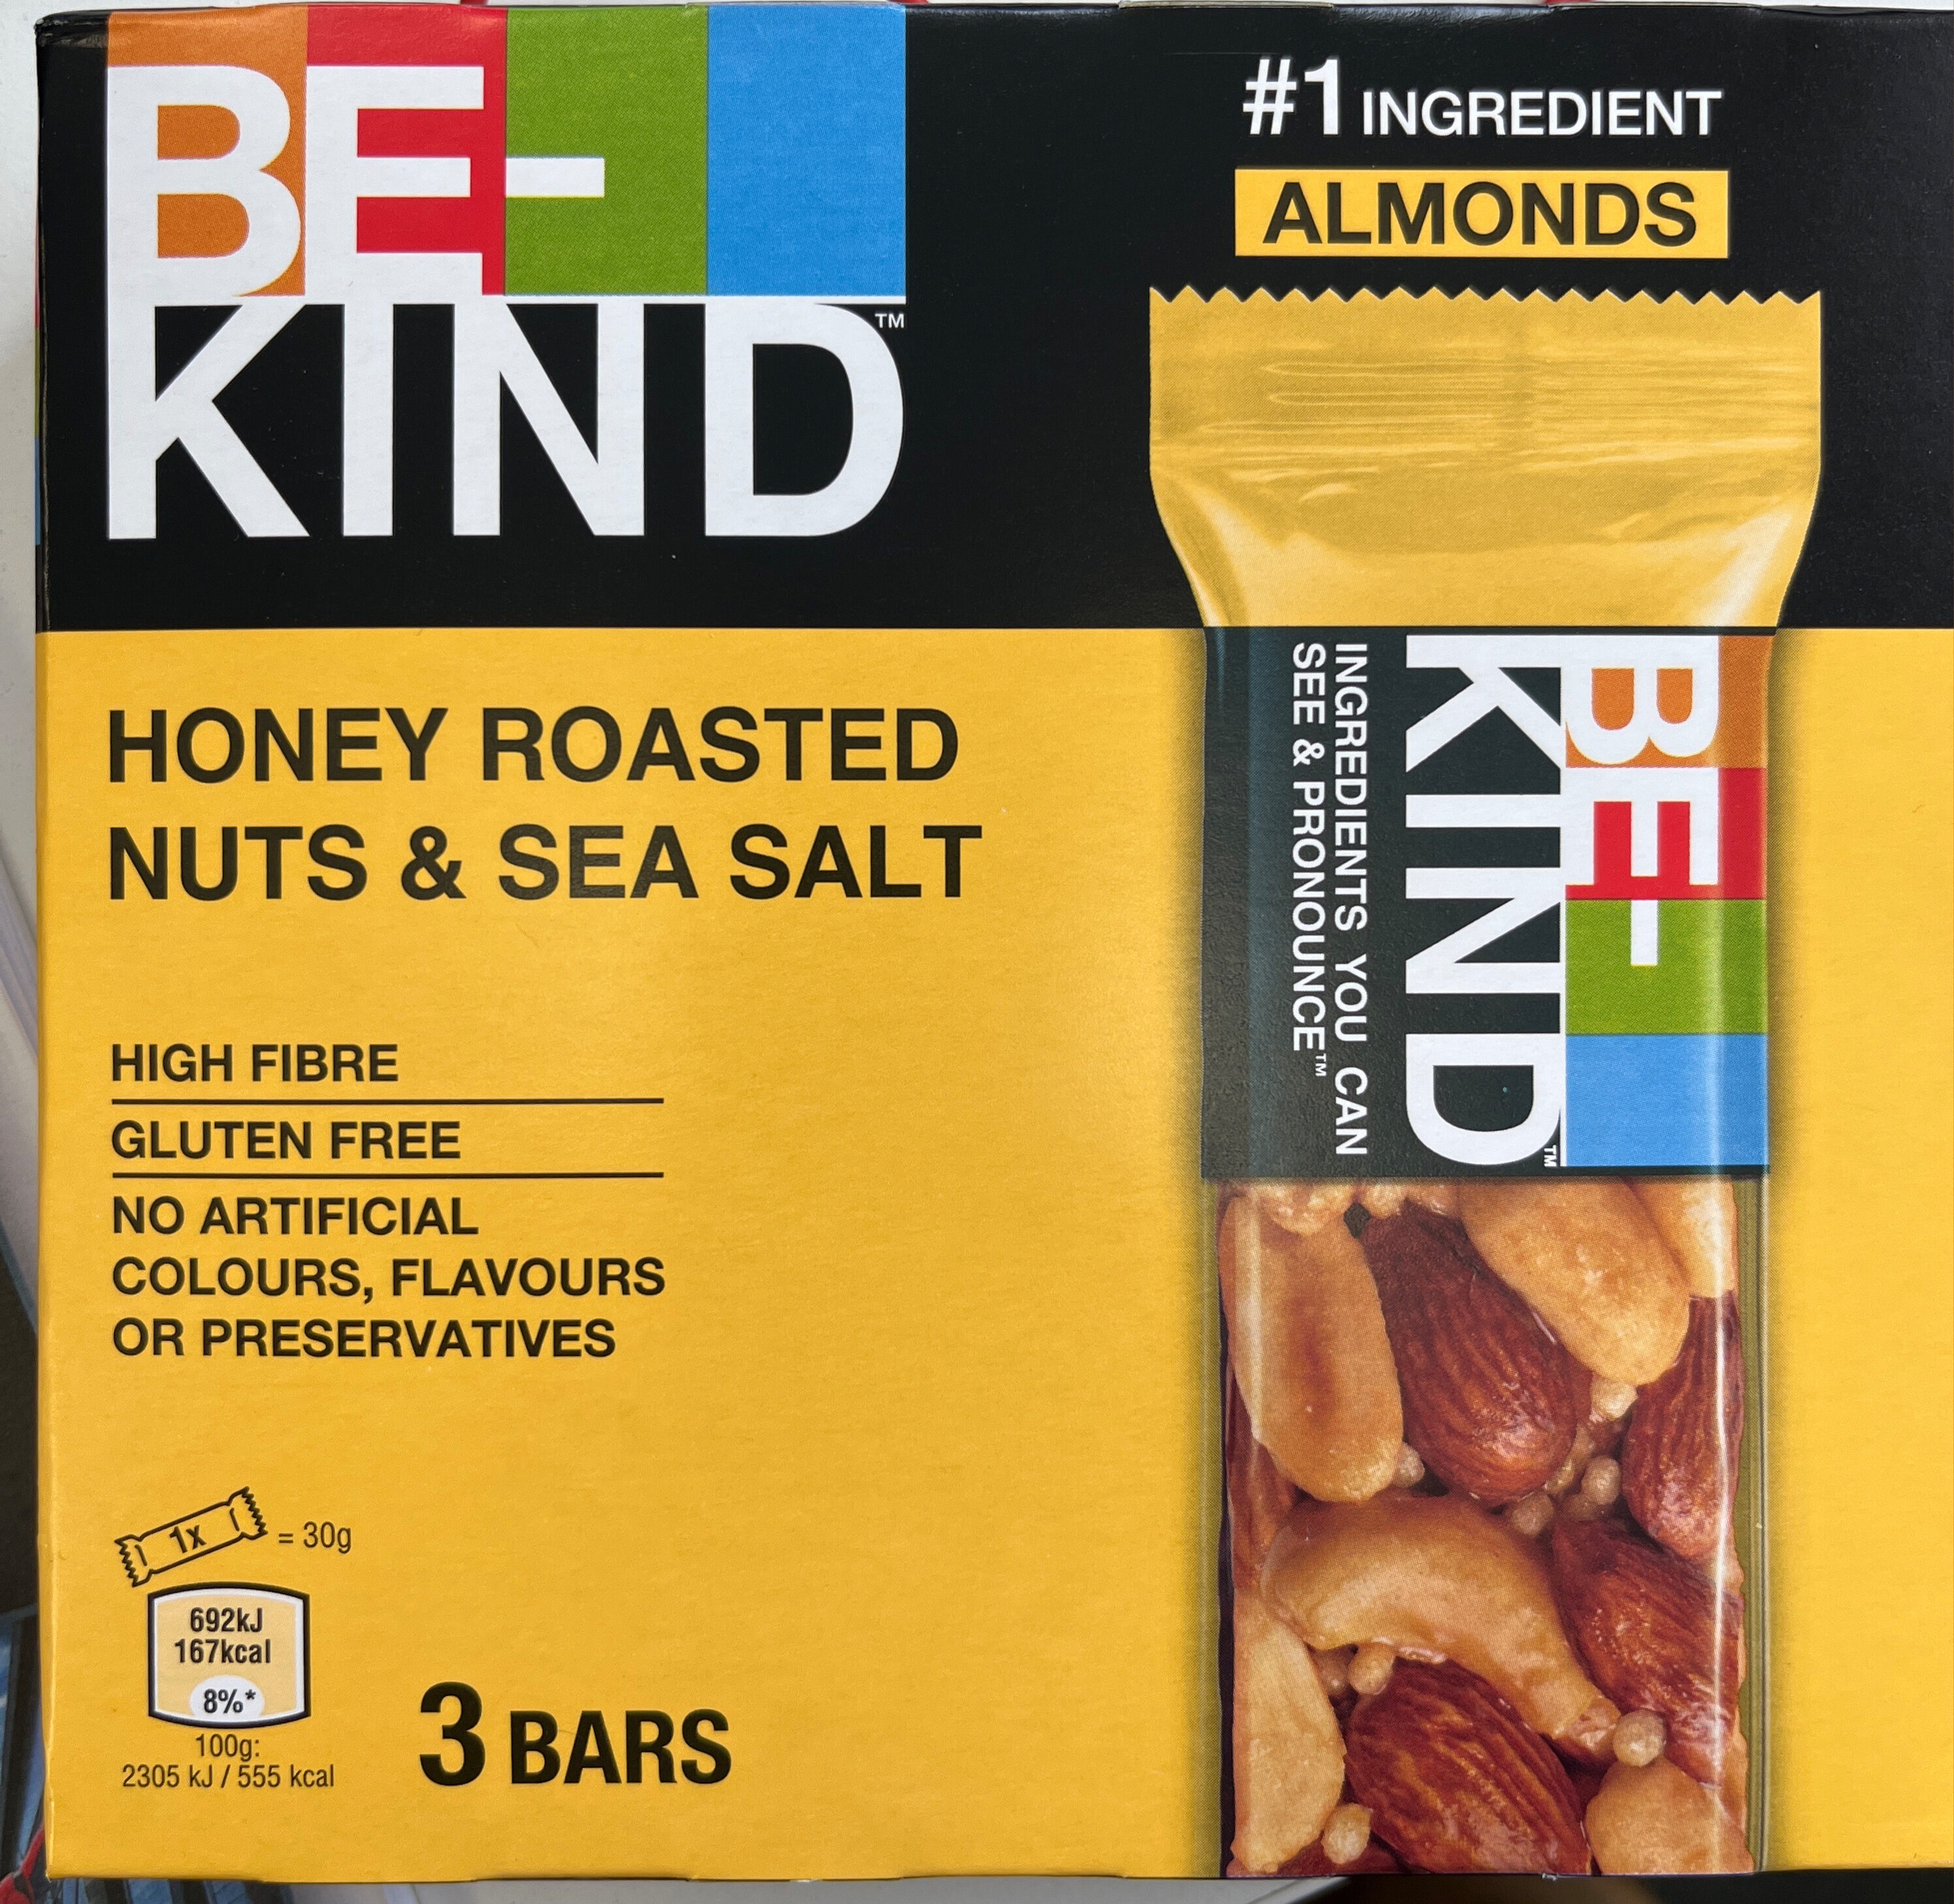 Honey roasted nuts and sea salt - Product - fr